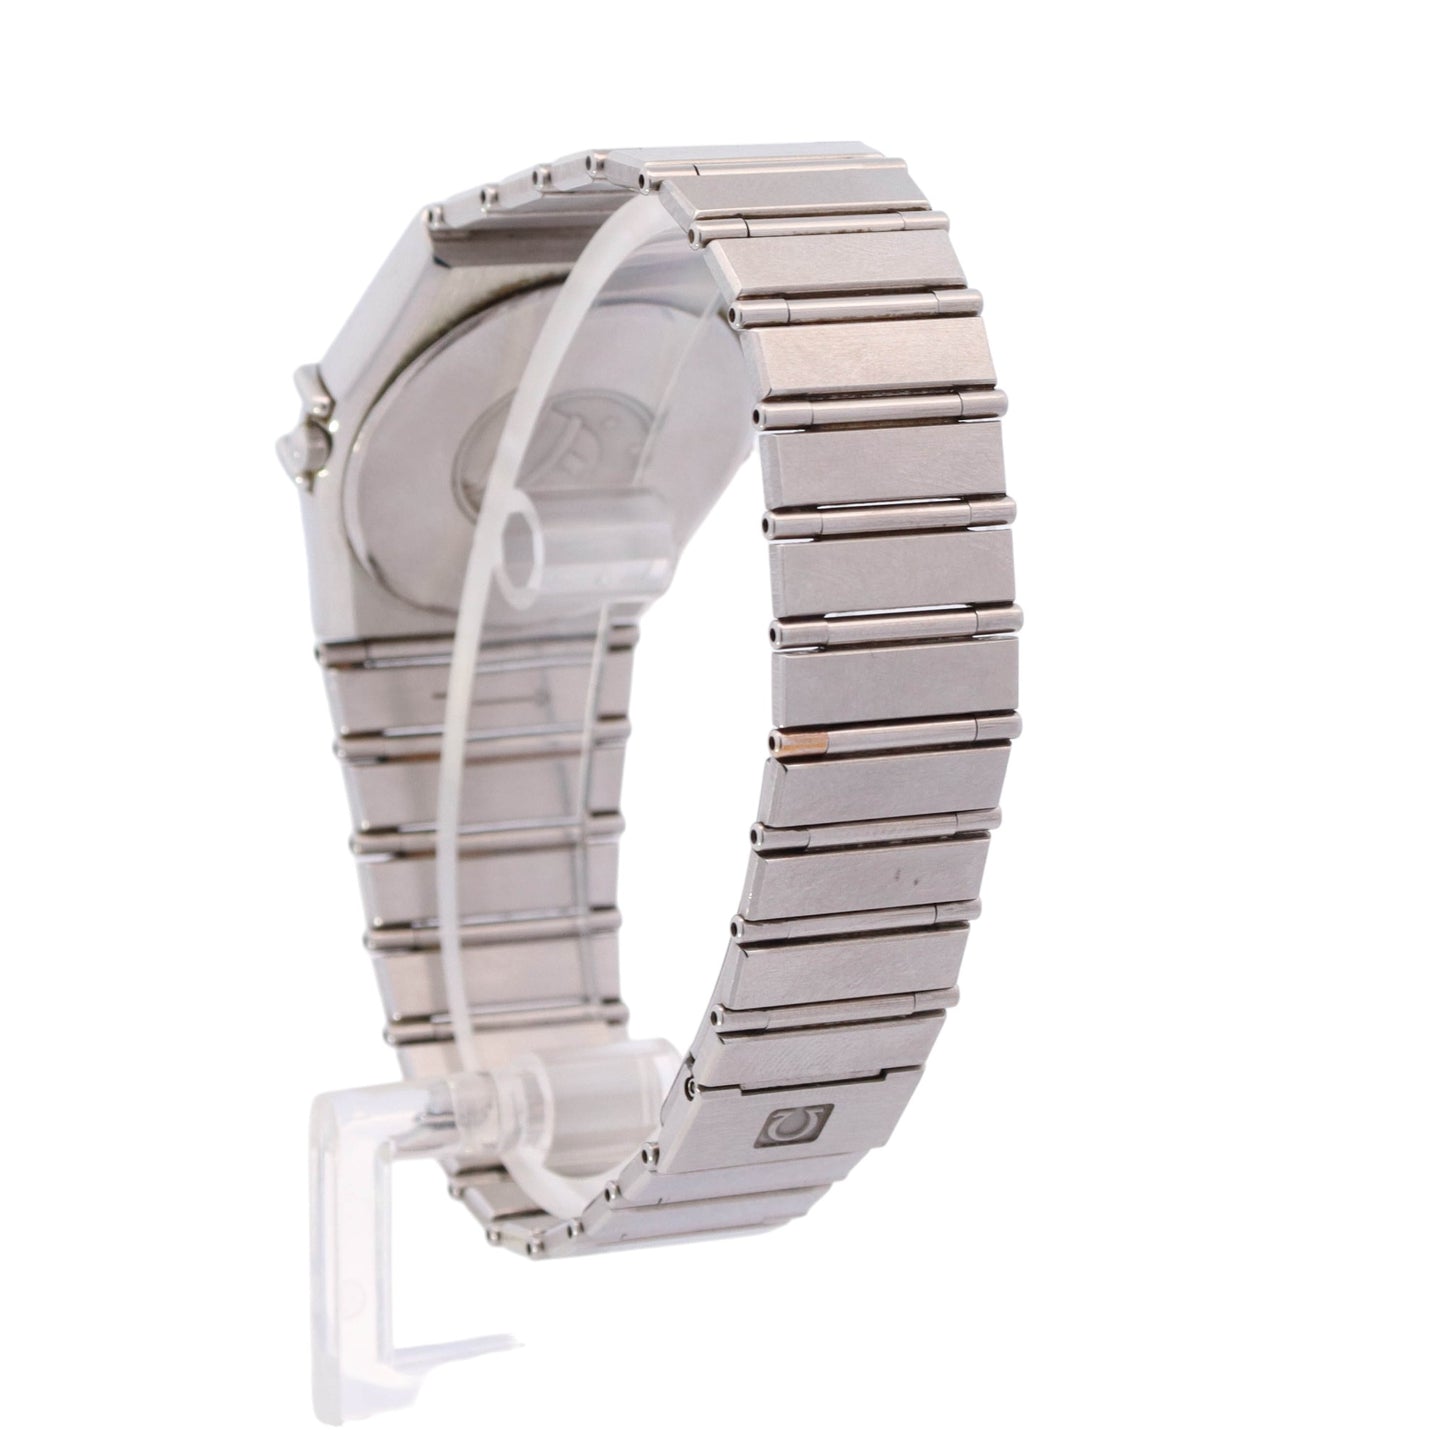 Omega Costellation Stainless Steel 32mm Black Dot Dial Watch Ref# 396.1070 - Happy Jewelers Fine Jewelry Lifetime Warranty